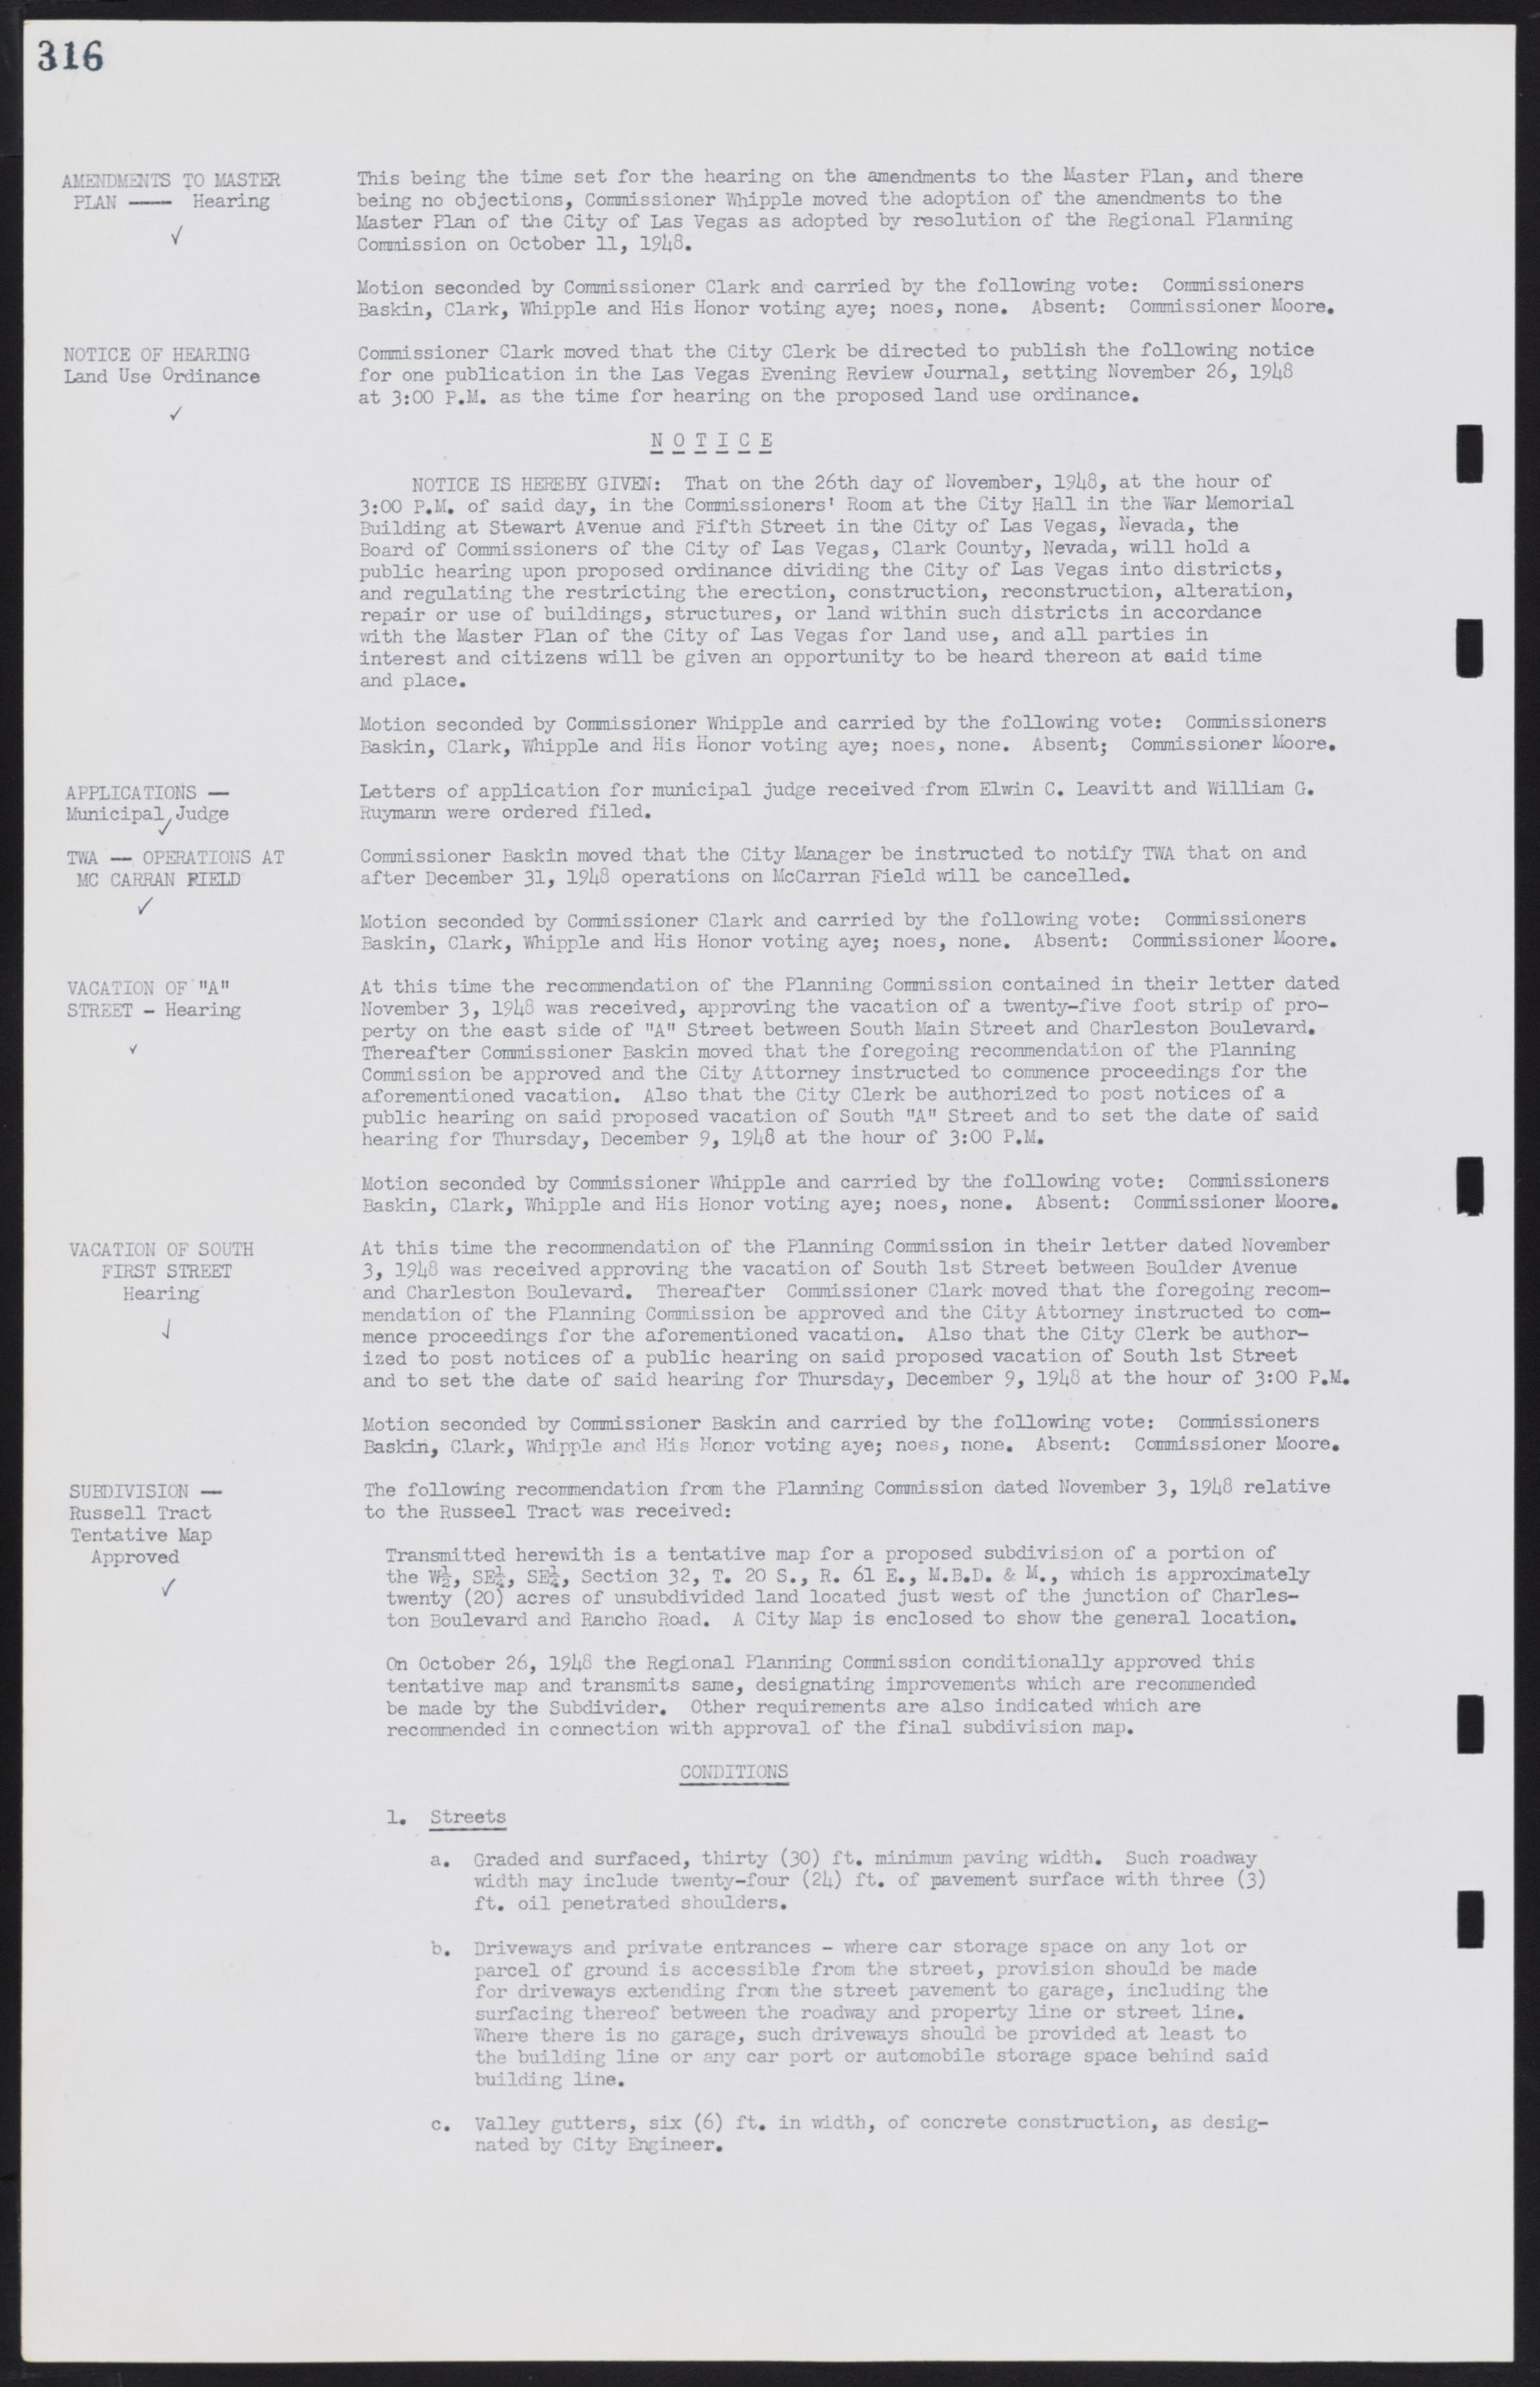 Las Vegas City Commission Minutes, January 7, 1947 to October 26, 1949, lvc000006-340